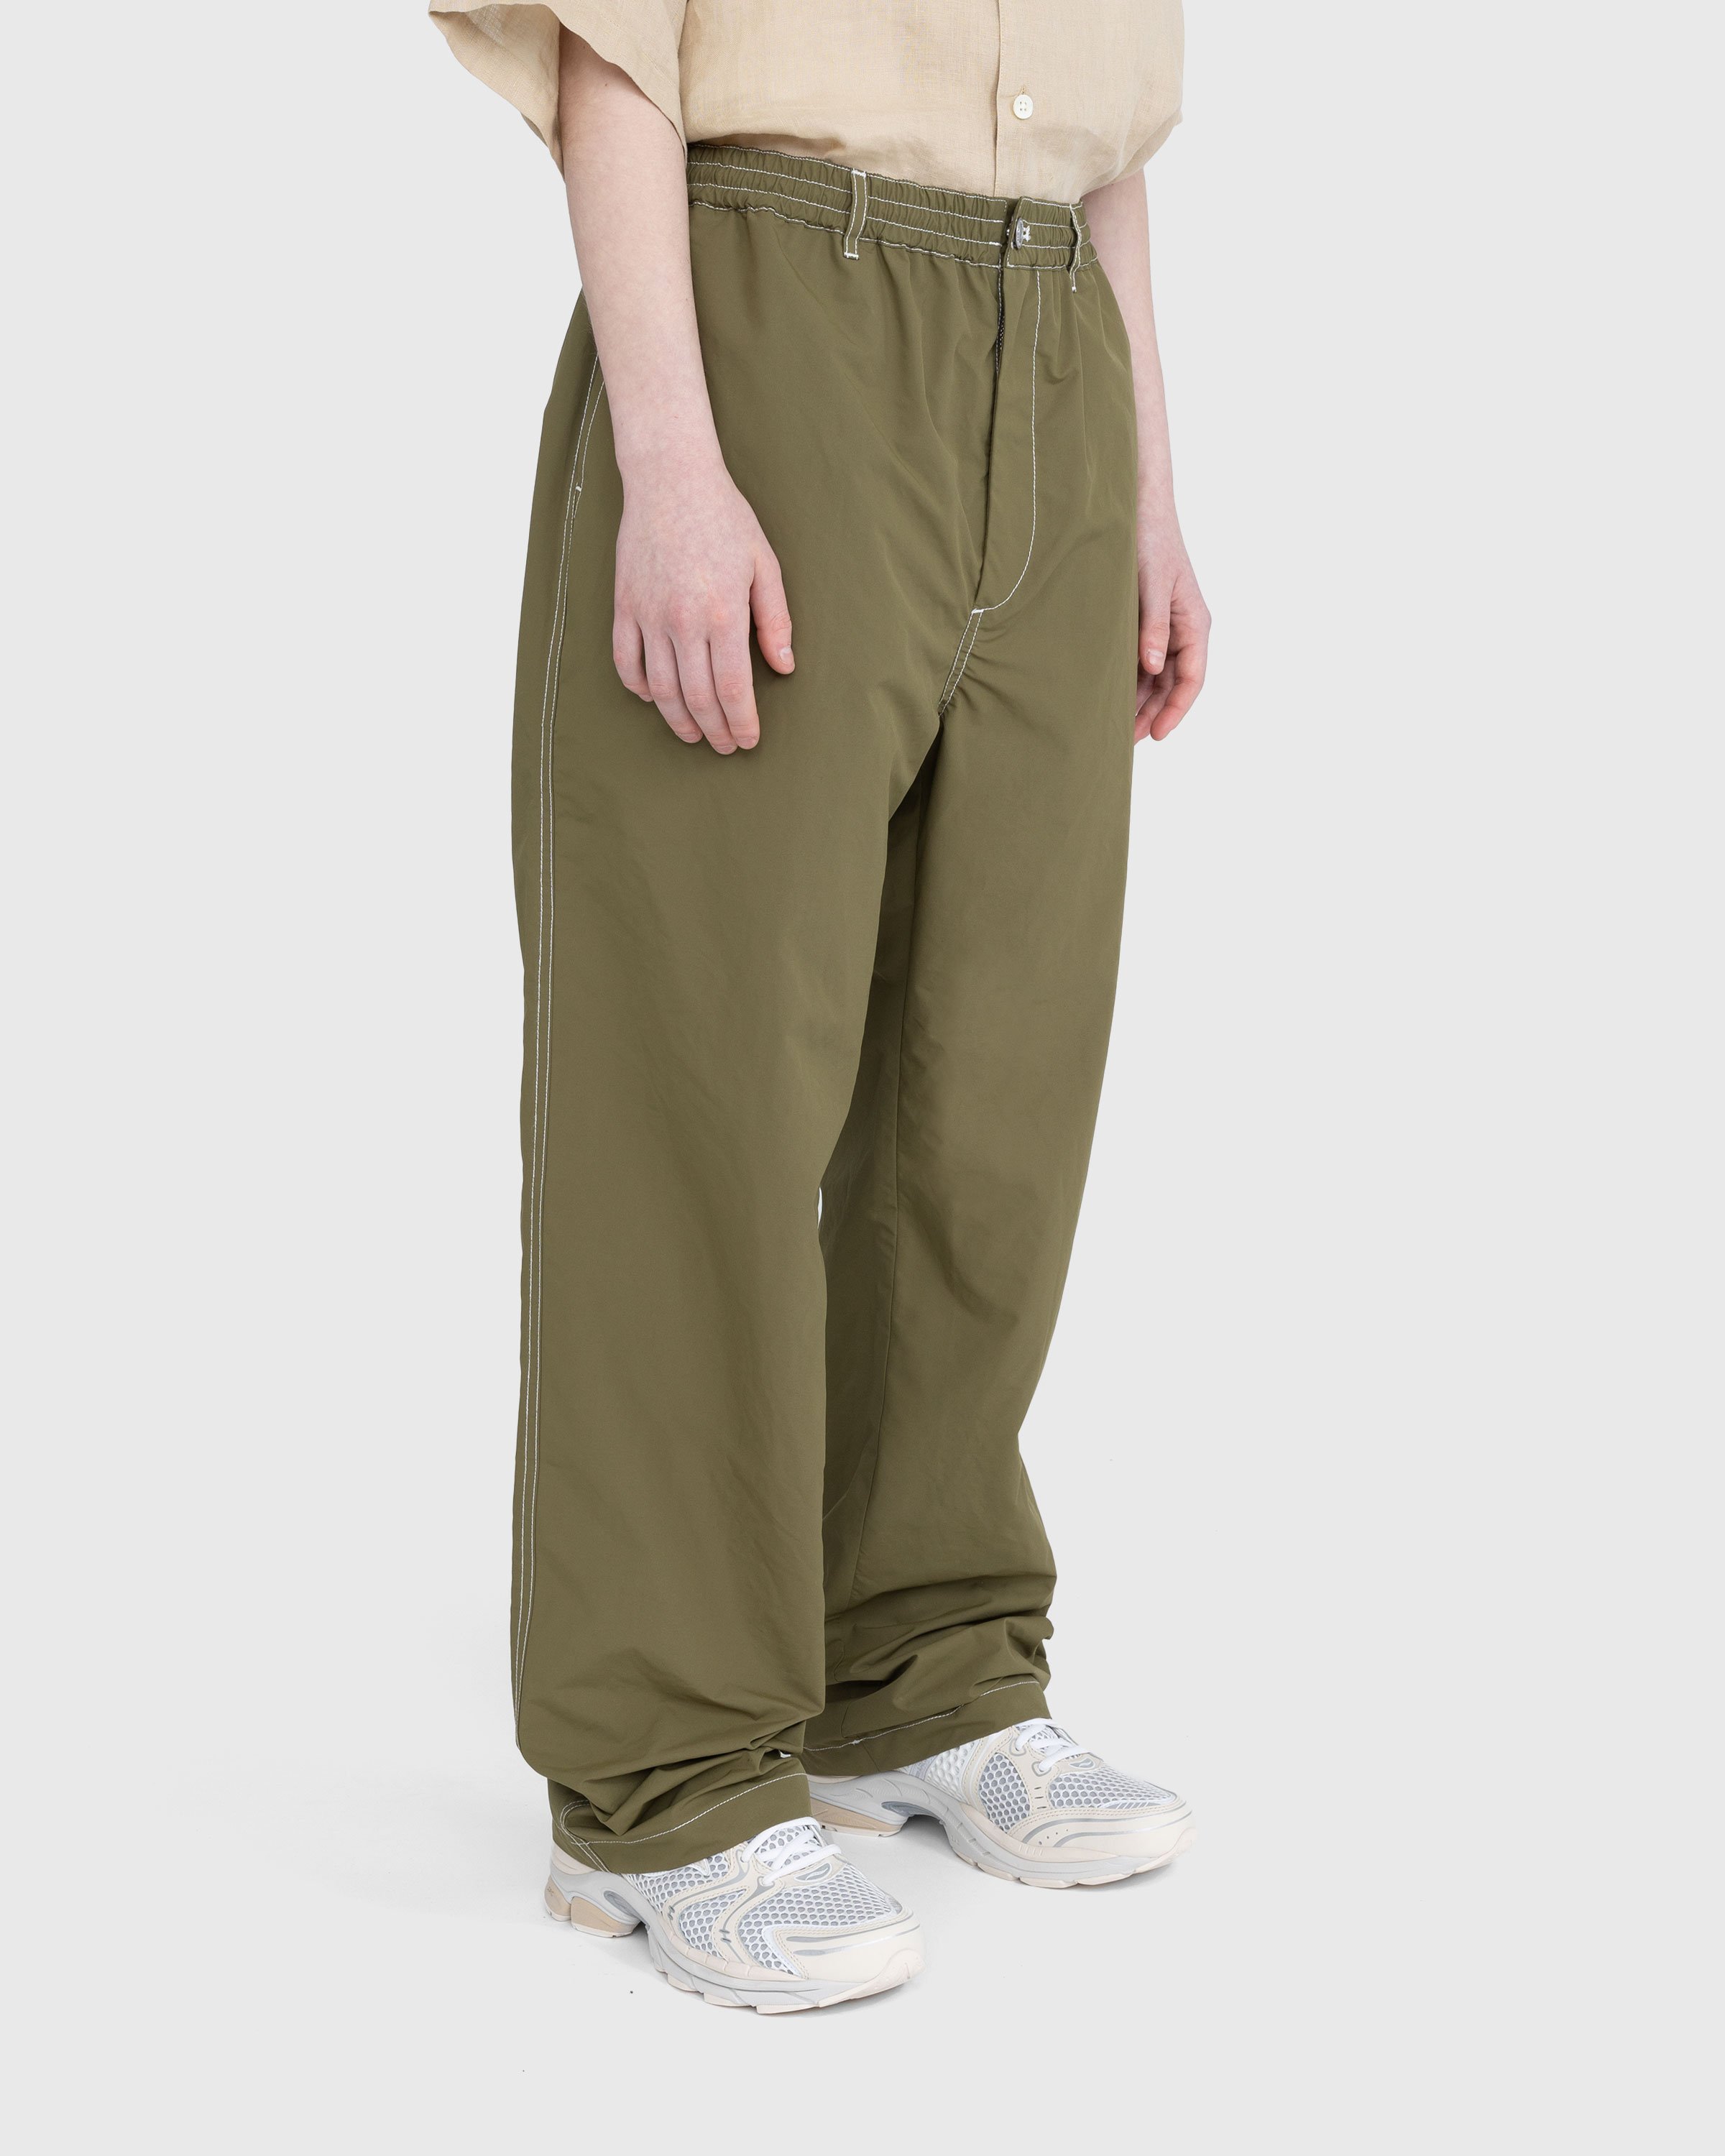 Highsnobiety - Contrast Stitch Pants Khaki - Clothing - Green - Image 4